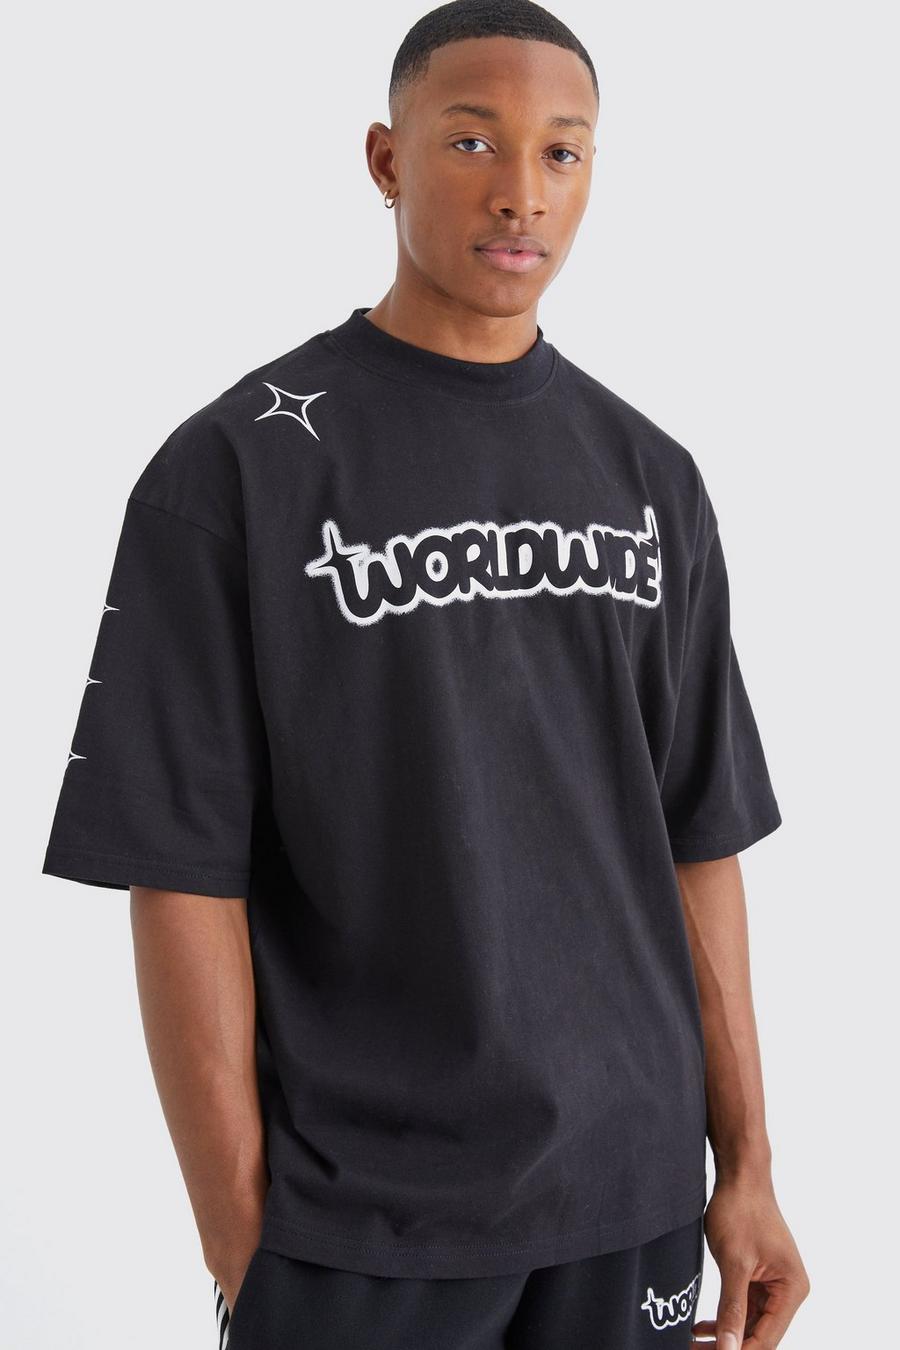 Kastiges Oversize T-Shirt mit Worldwide-Print, Black